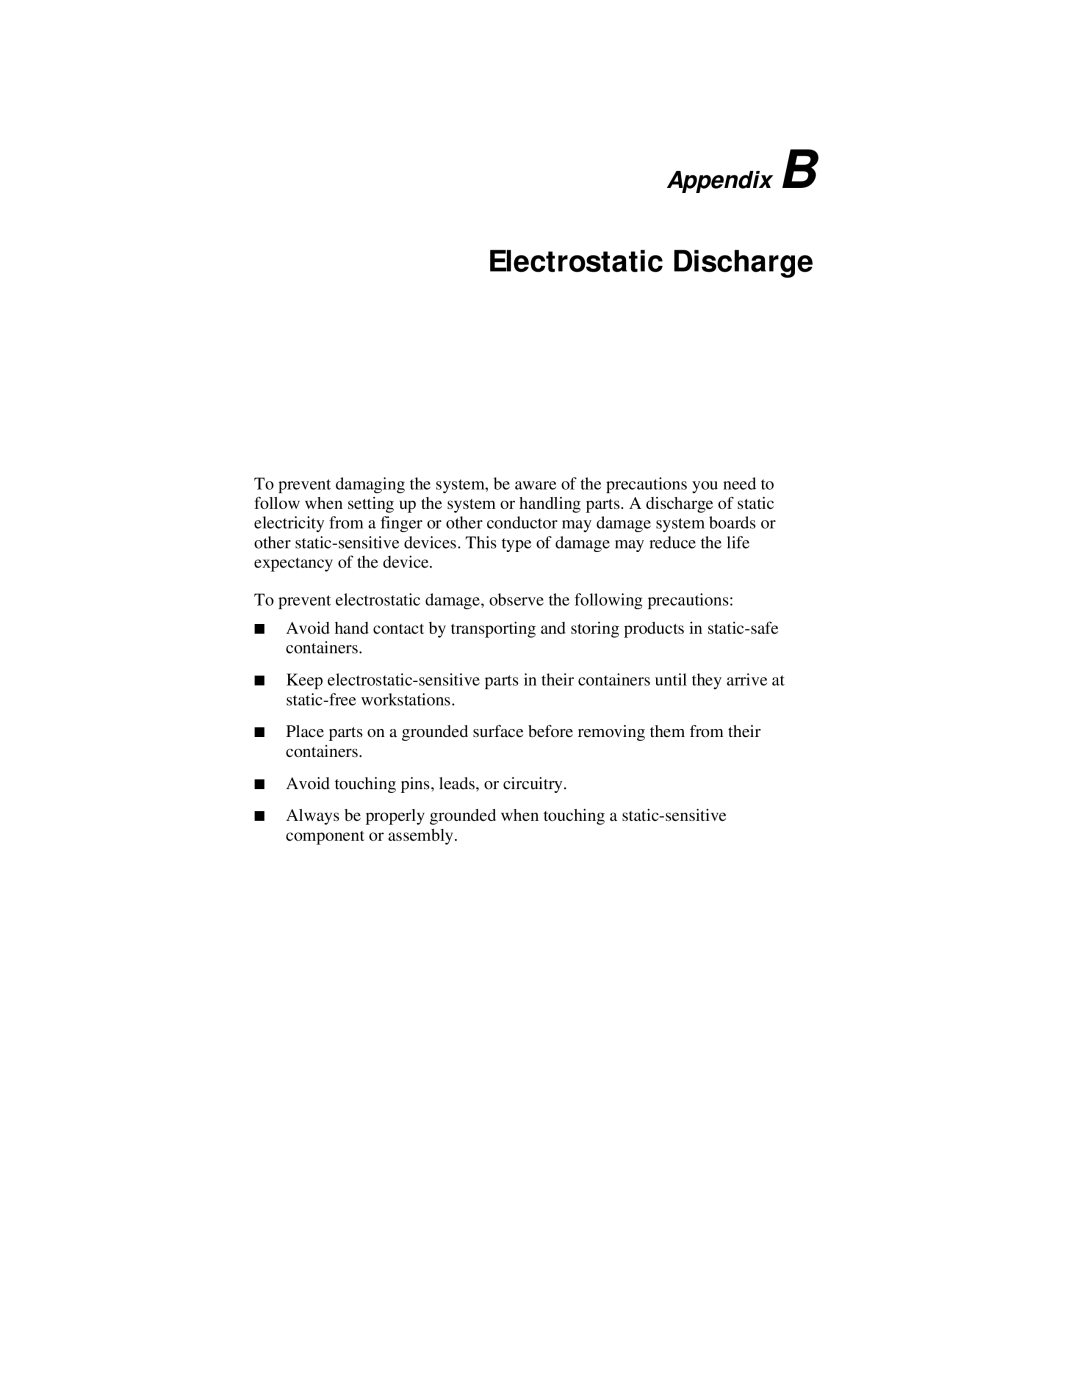 Compaq R6000 Series manual Electrostatic Discharge, Appendix B 